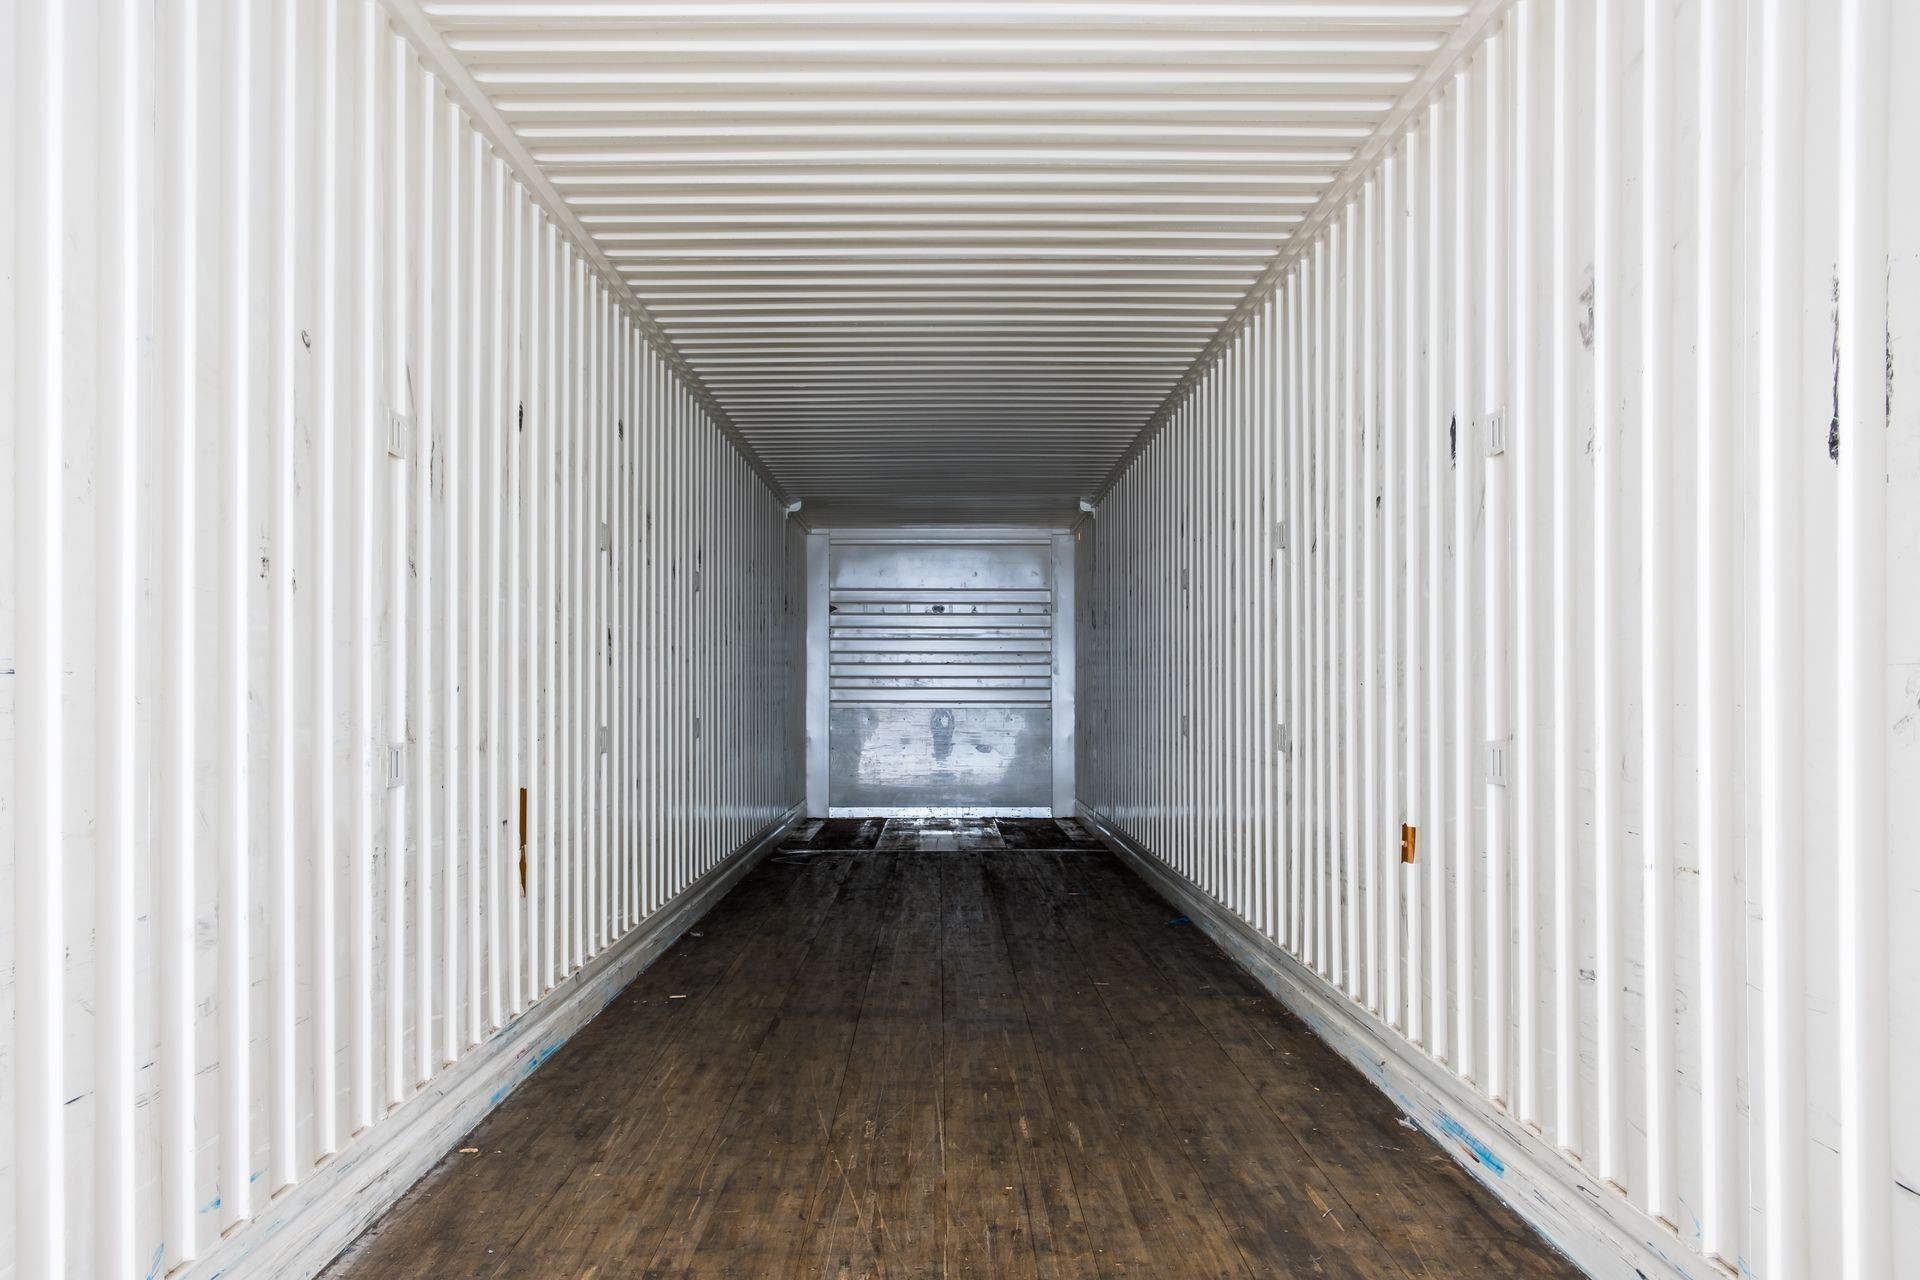 Interior view of empty semi truck dry van commercial trailer